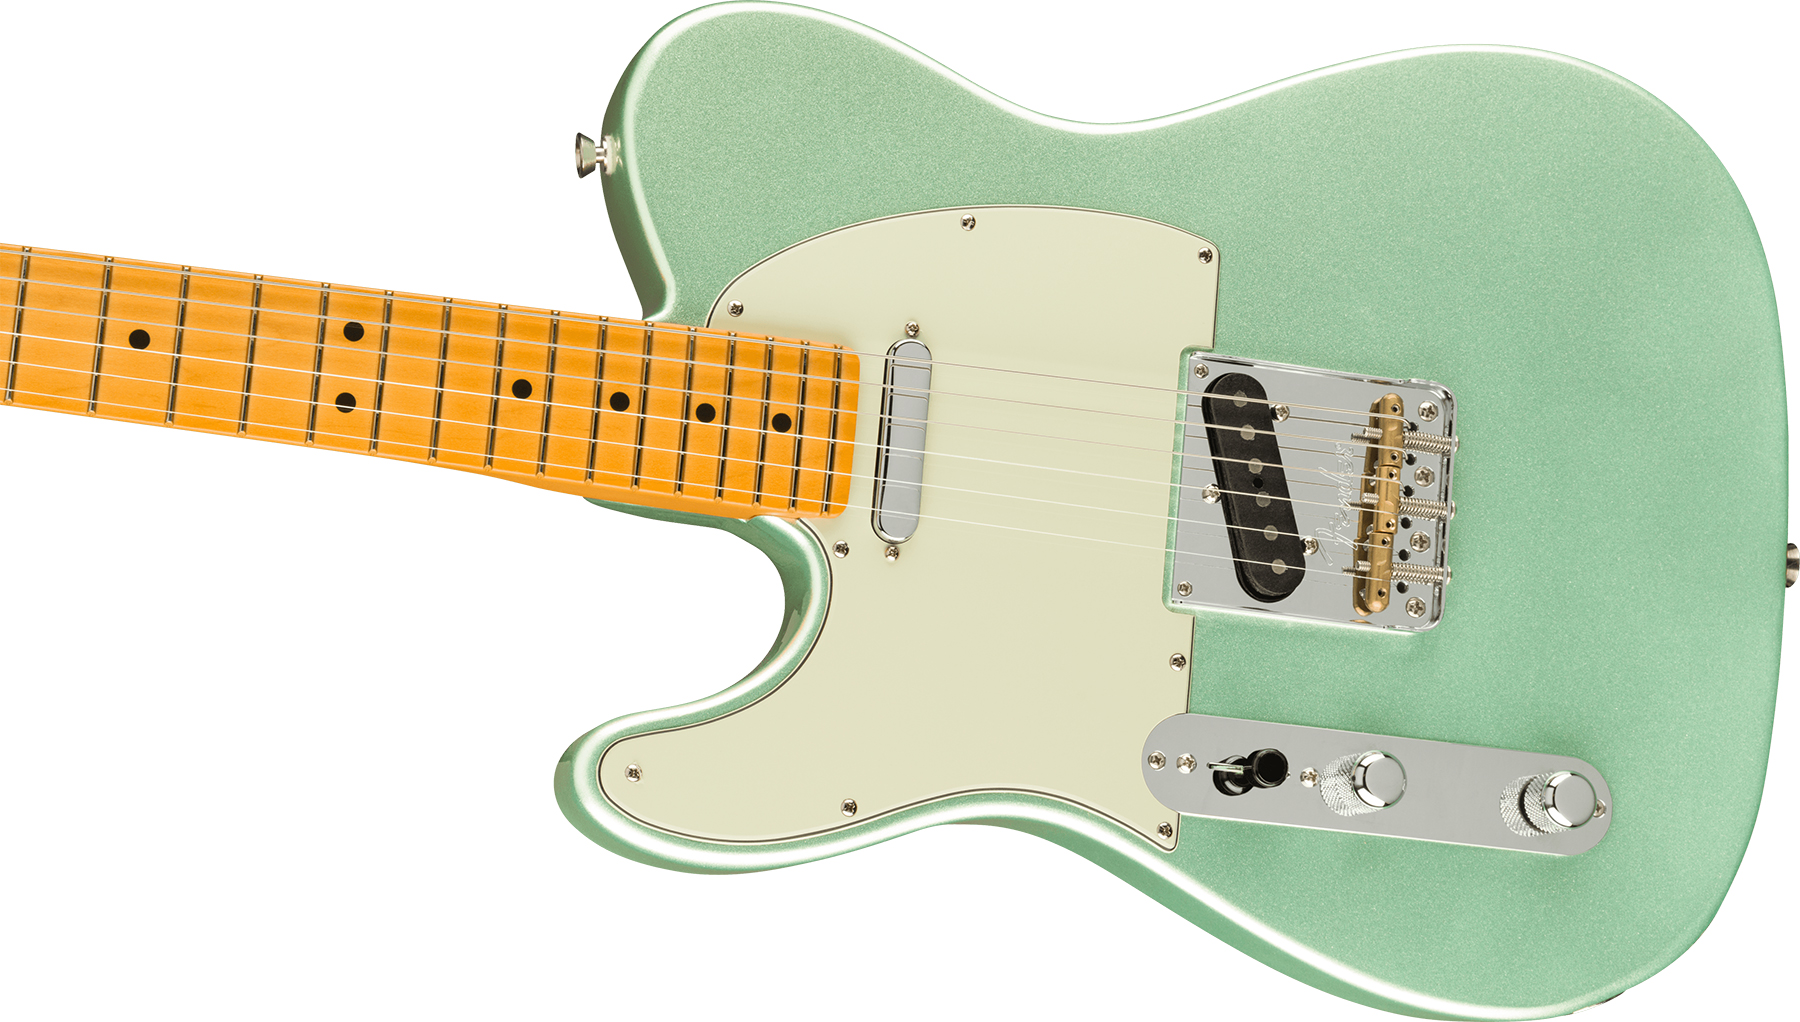 Fender Tele American Professional Ii Lh Gaucher Usa Mn - Mystic Surf Green - Left-handed electric guitar - Variation 2